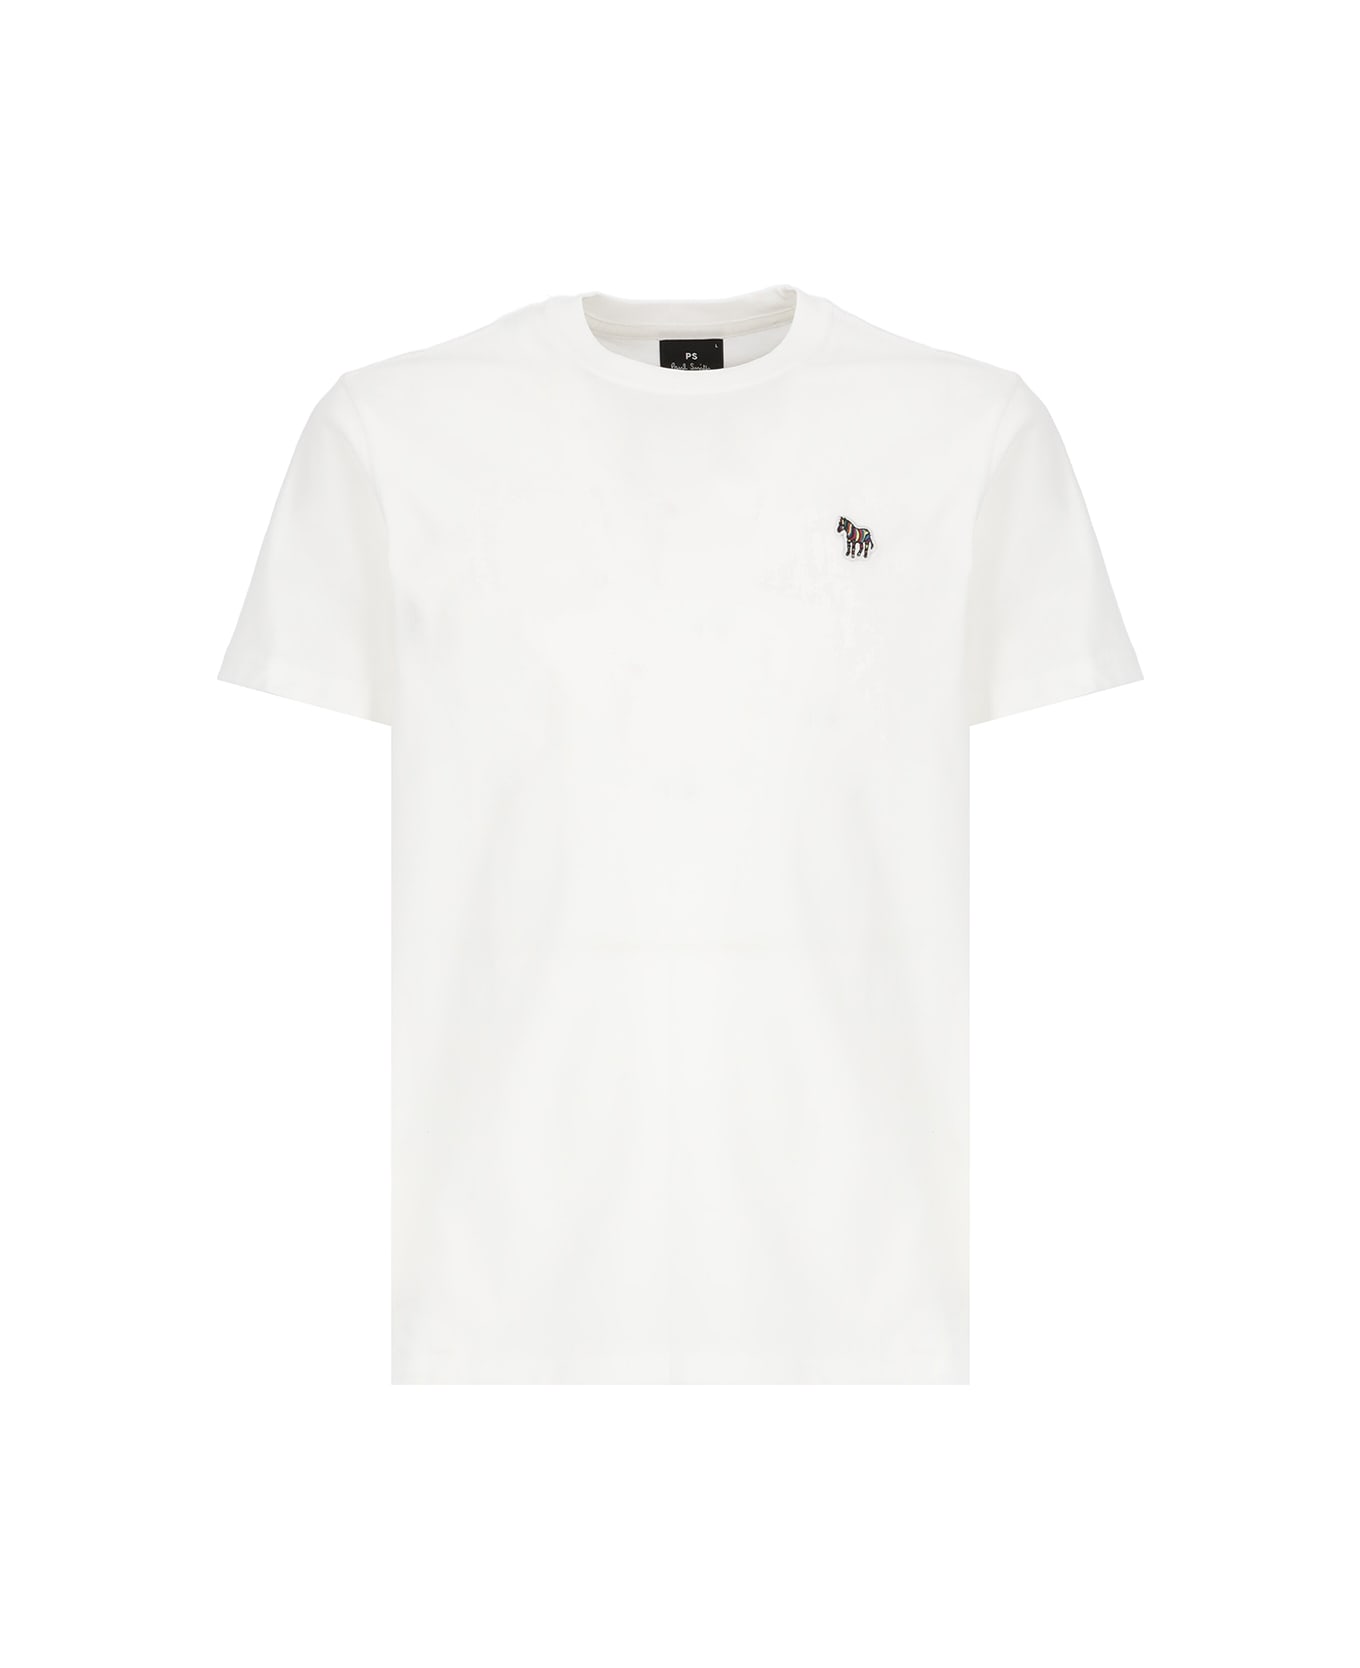 PS by Paul Smith Zebra T-shirt - WHITE